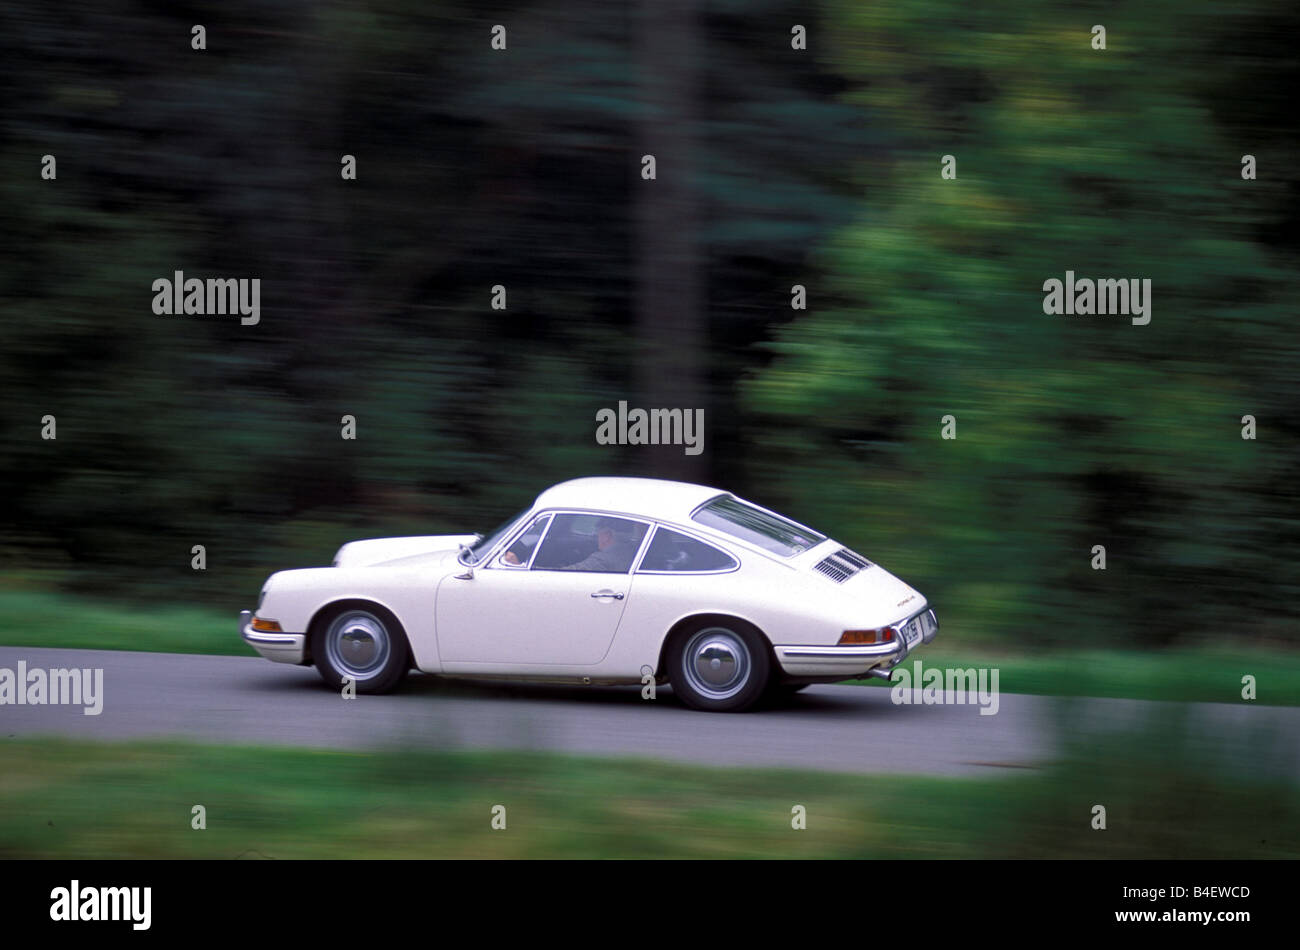 Car, Porsche 911, sports car, Coupé, Coupe, model year 1964, vintage car, 1960s, sixties, white, driving, diagonal back, side vi Stock Photo